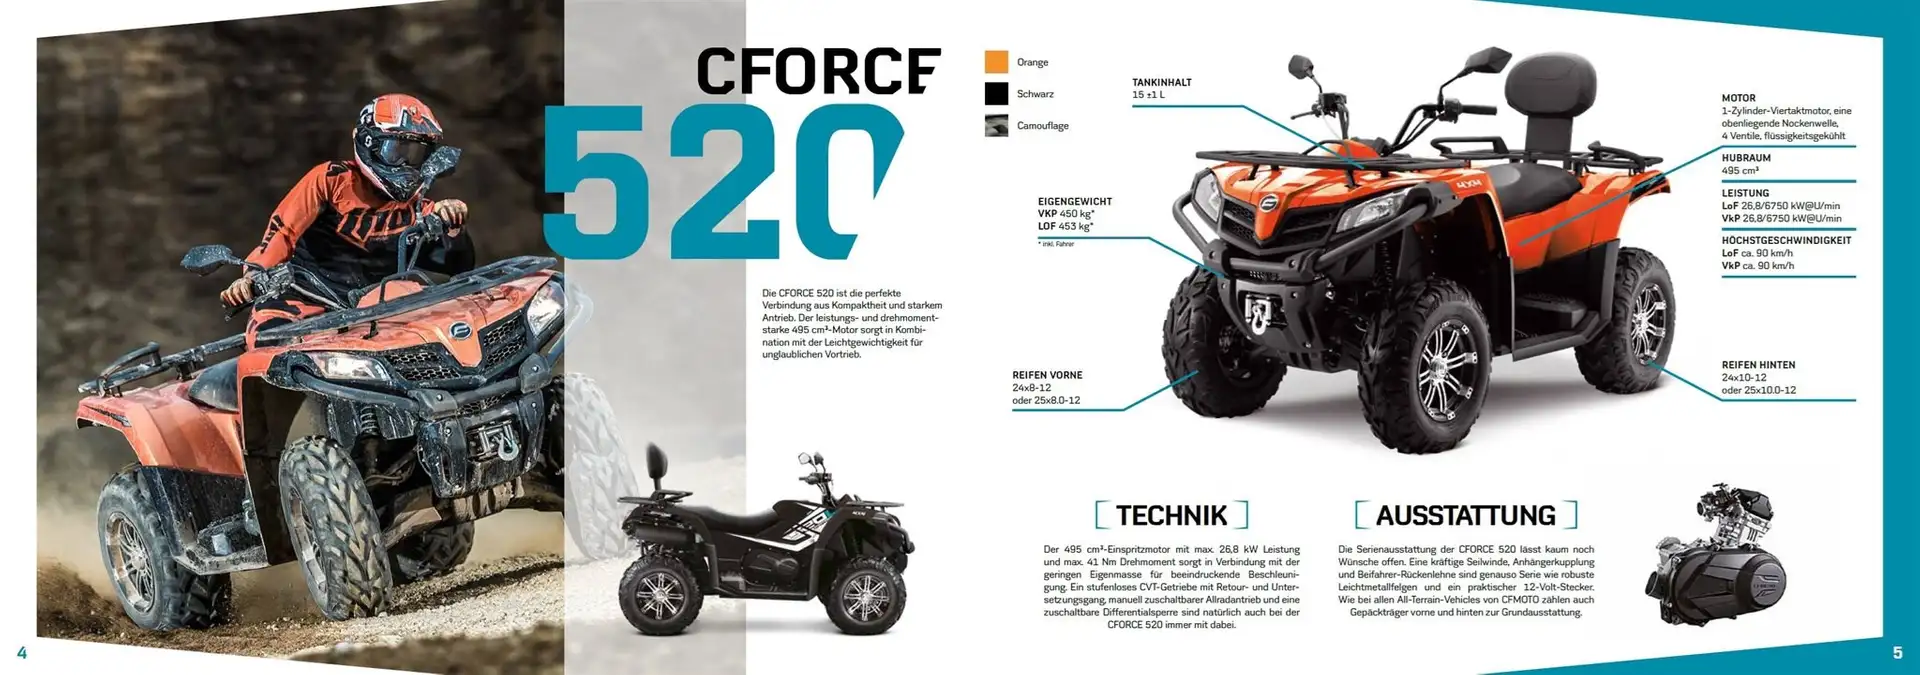 CF Moto CForce 520 - 2